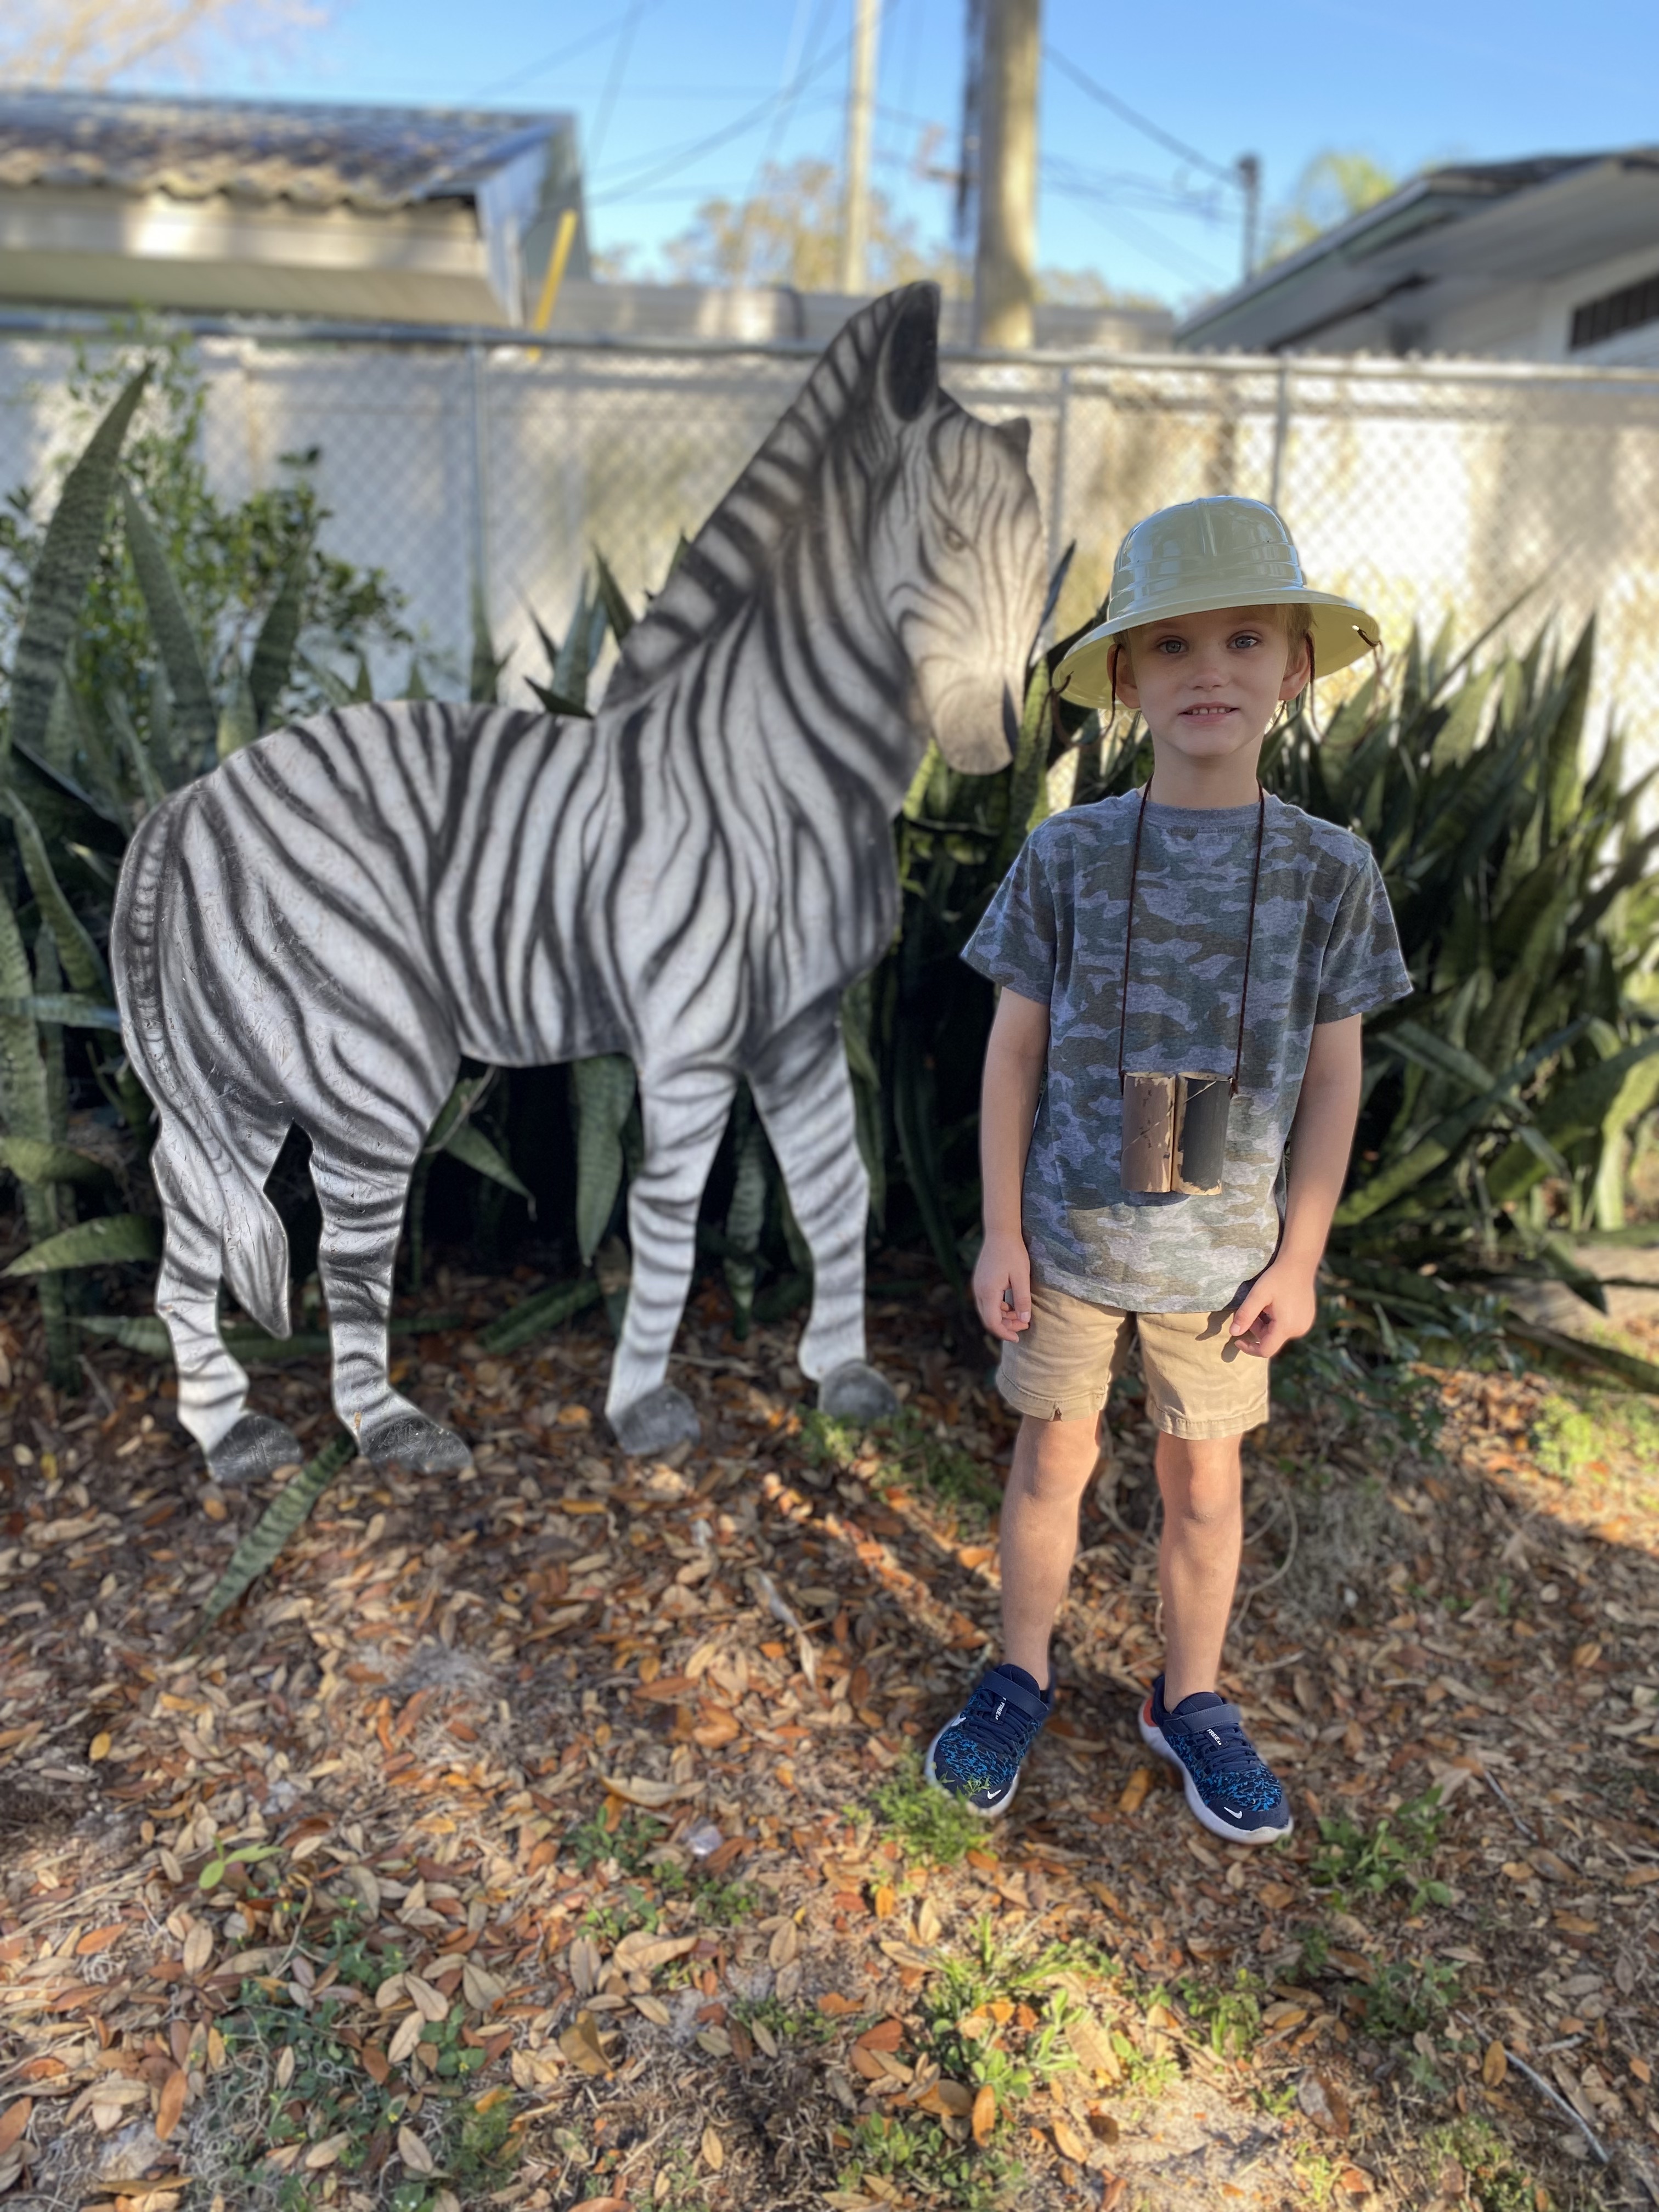 Kindergarten students on a safari with a zebra.